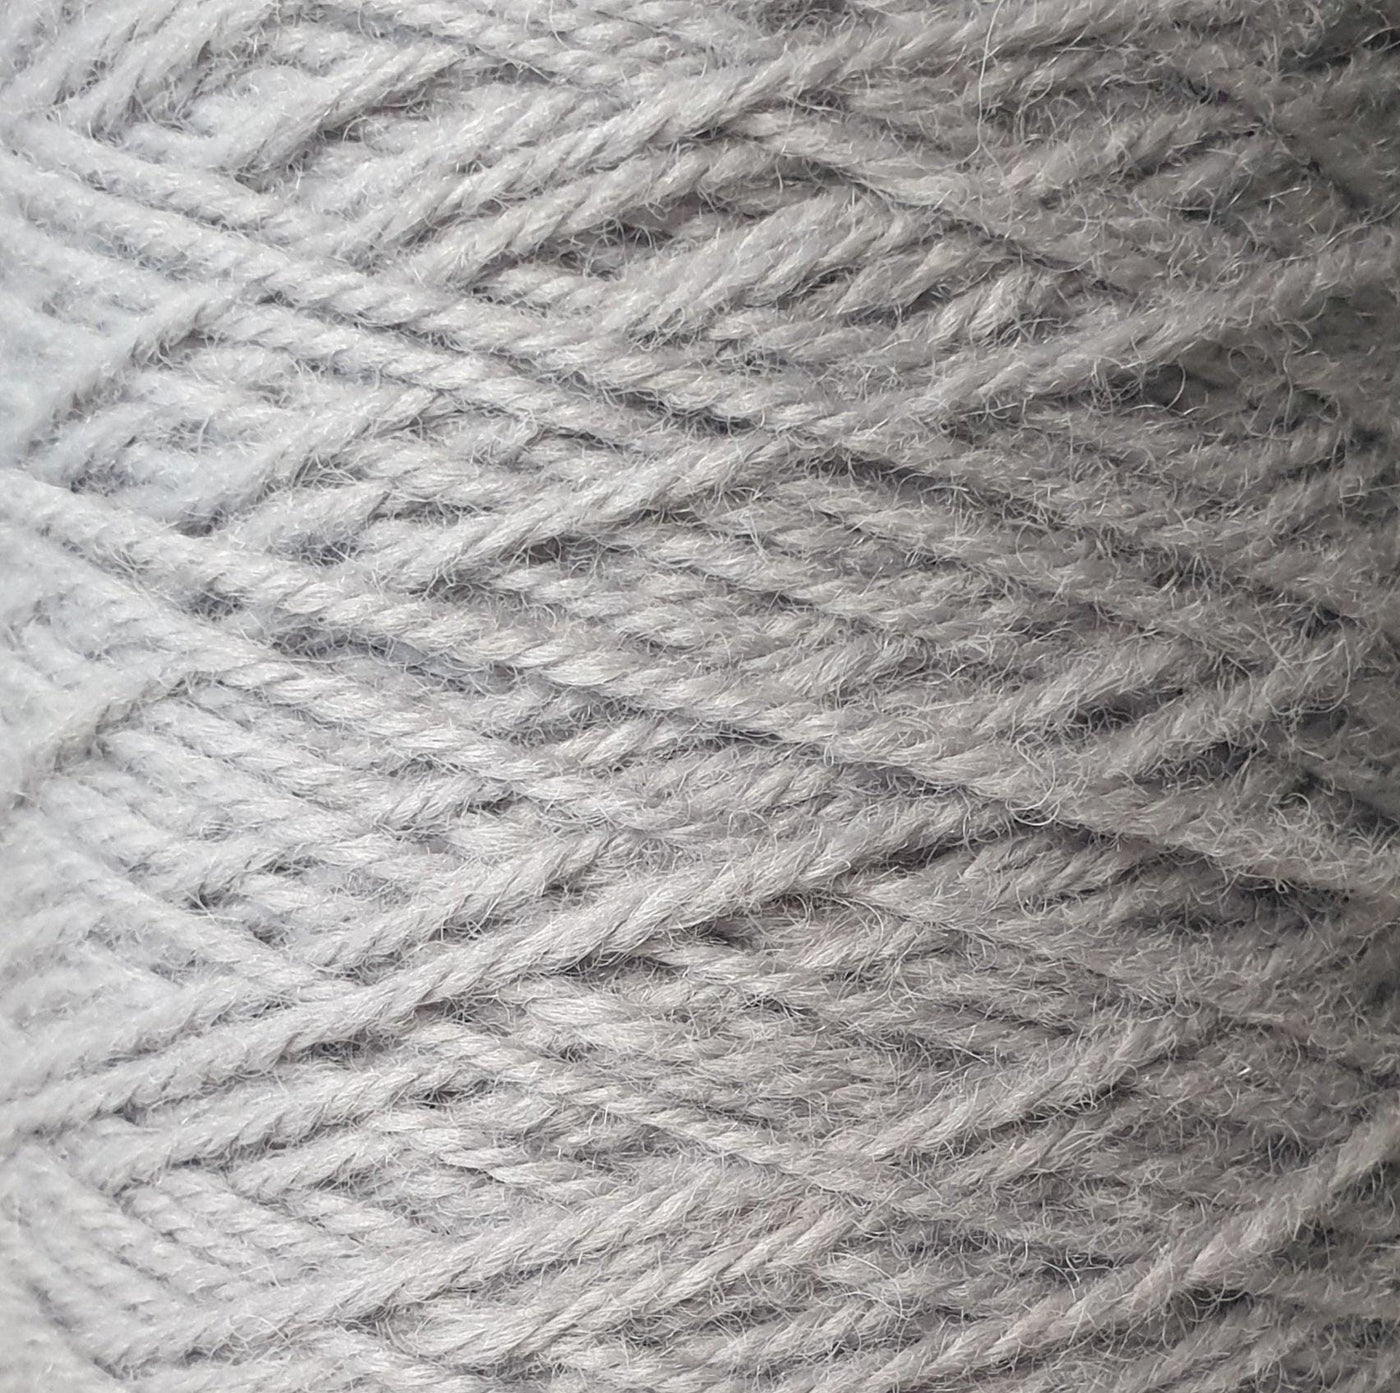 Rug tufting yarn - 100% NZ Wool - Large 500g cones - TuftCity